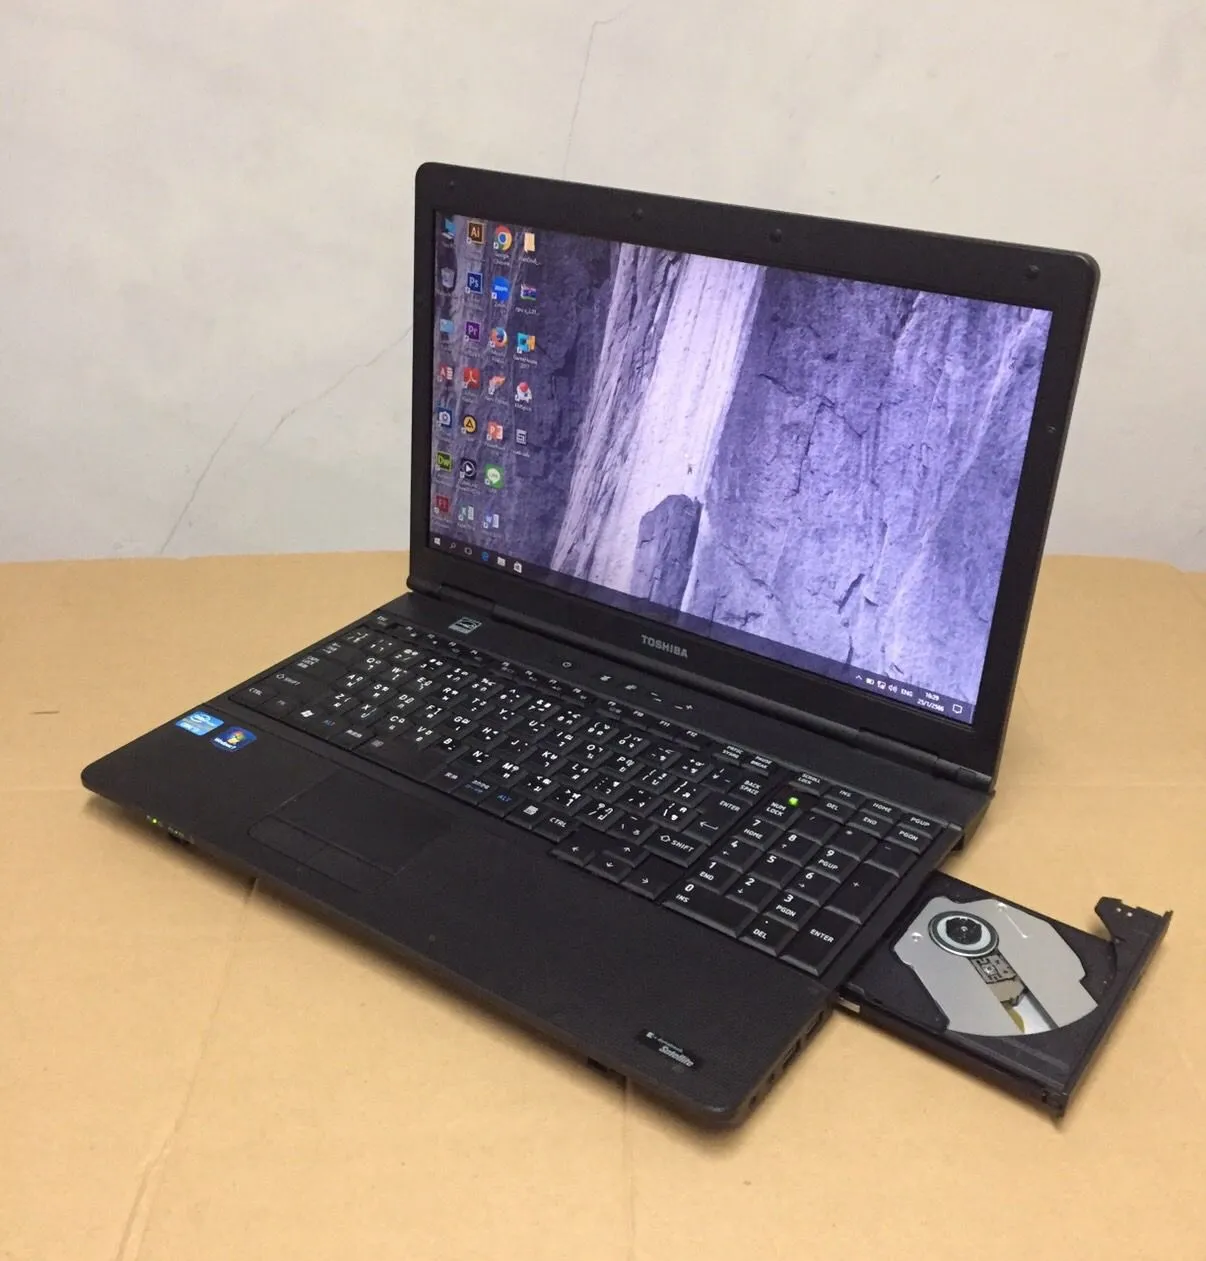 PC/タブレット ノートPC โน๊ตบุ๊คมือสอง Notebook TOSHIBA B551/E Core i3-2350M(RAM:4GB/HDD:160GB)  ขนาด 15.6นิ้ว